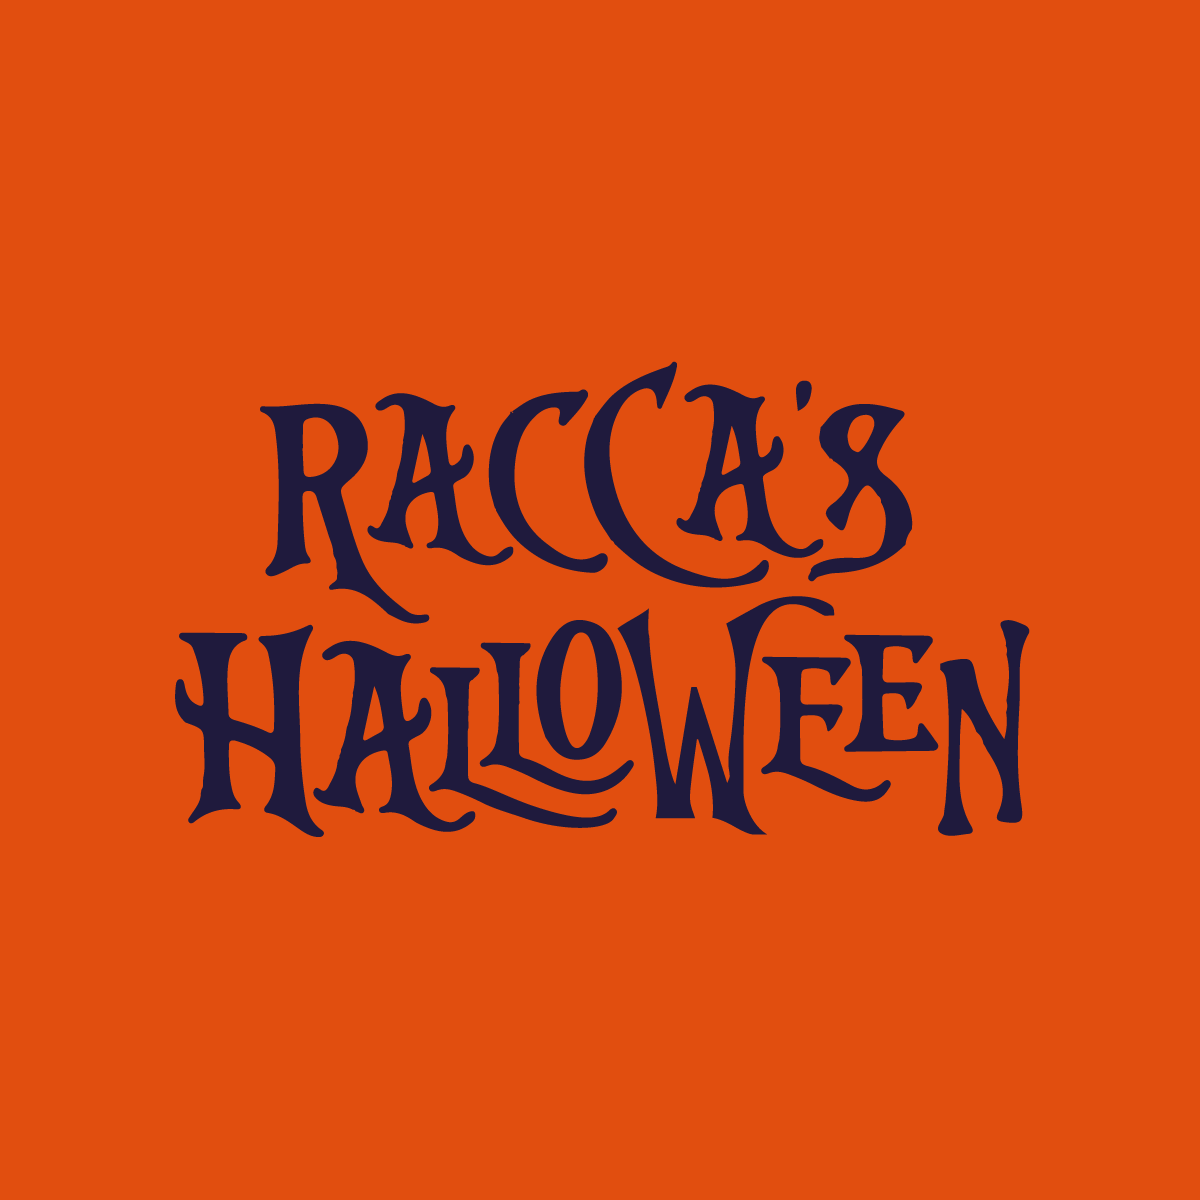 02_Racca_Halloween